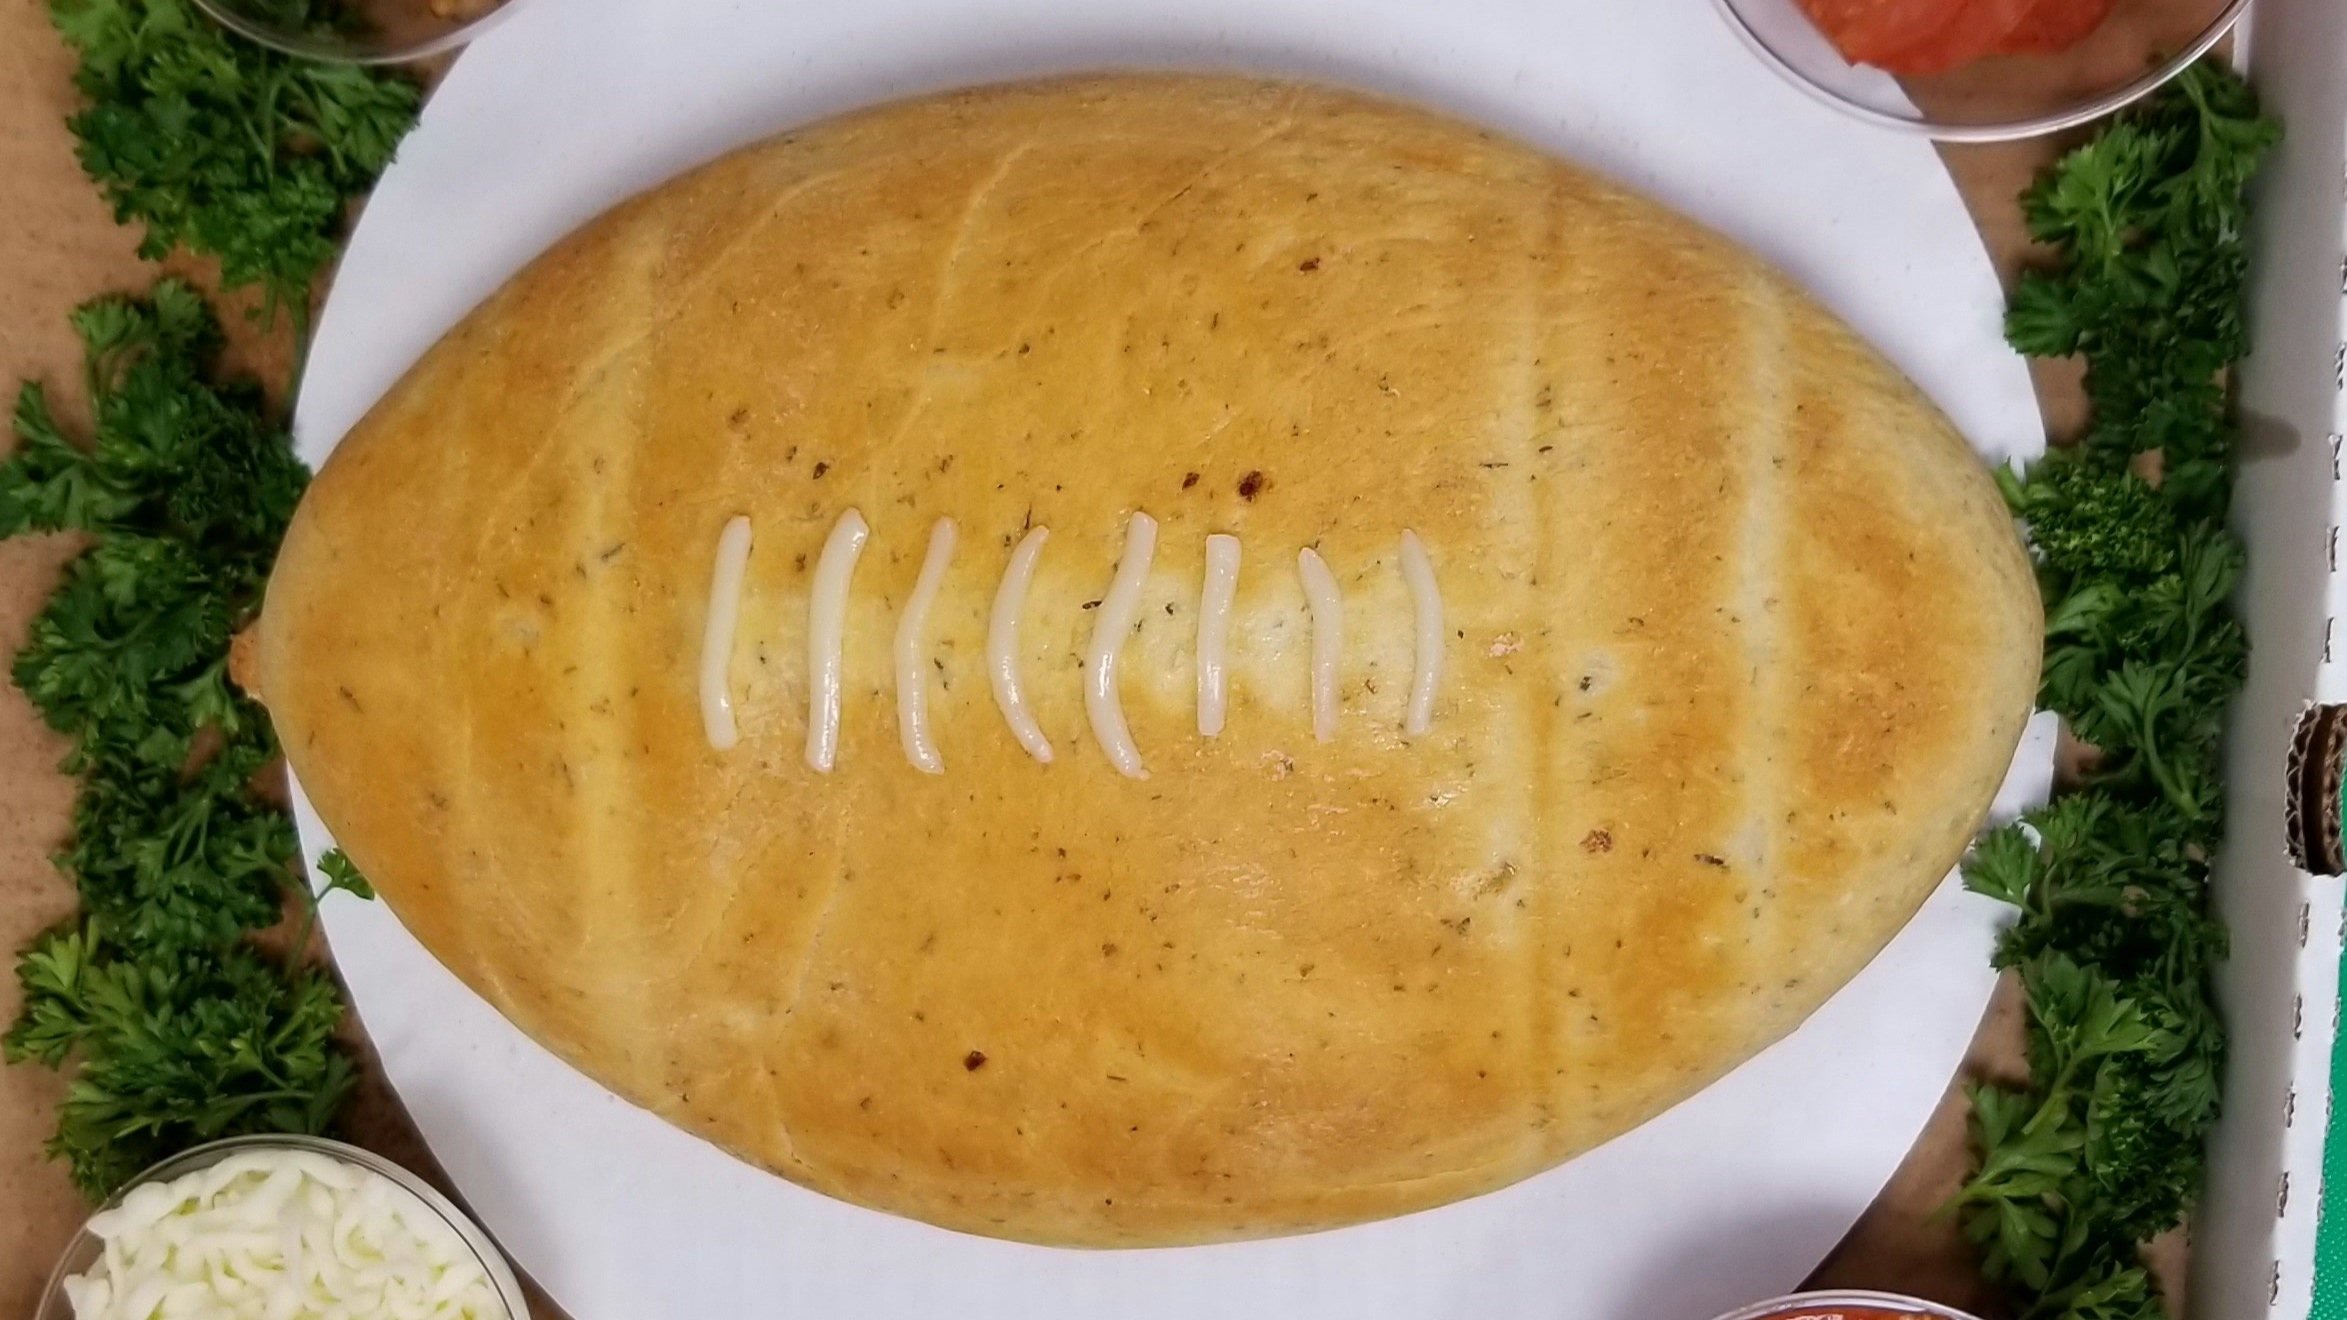 Football Shaped Stuffed Crust Pizza